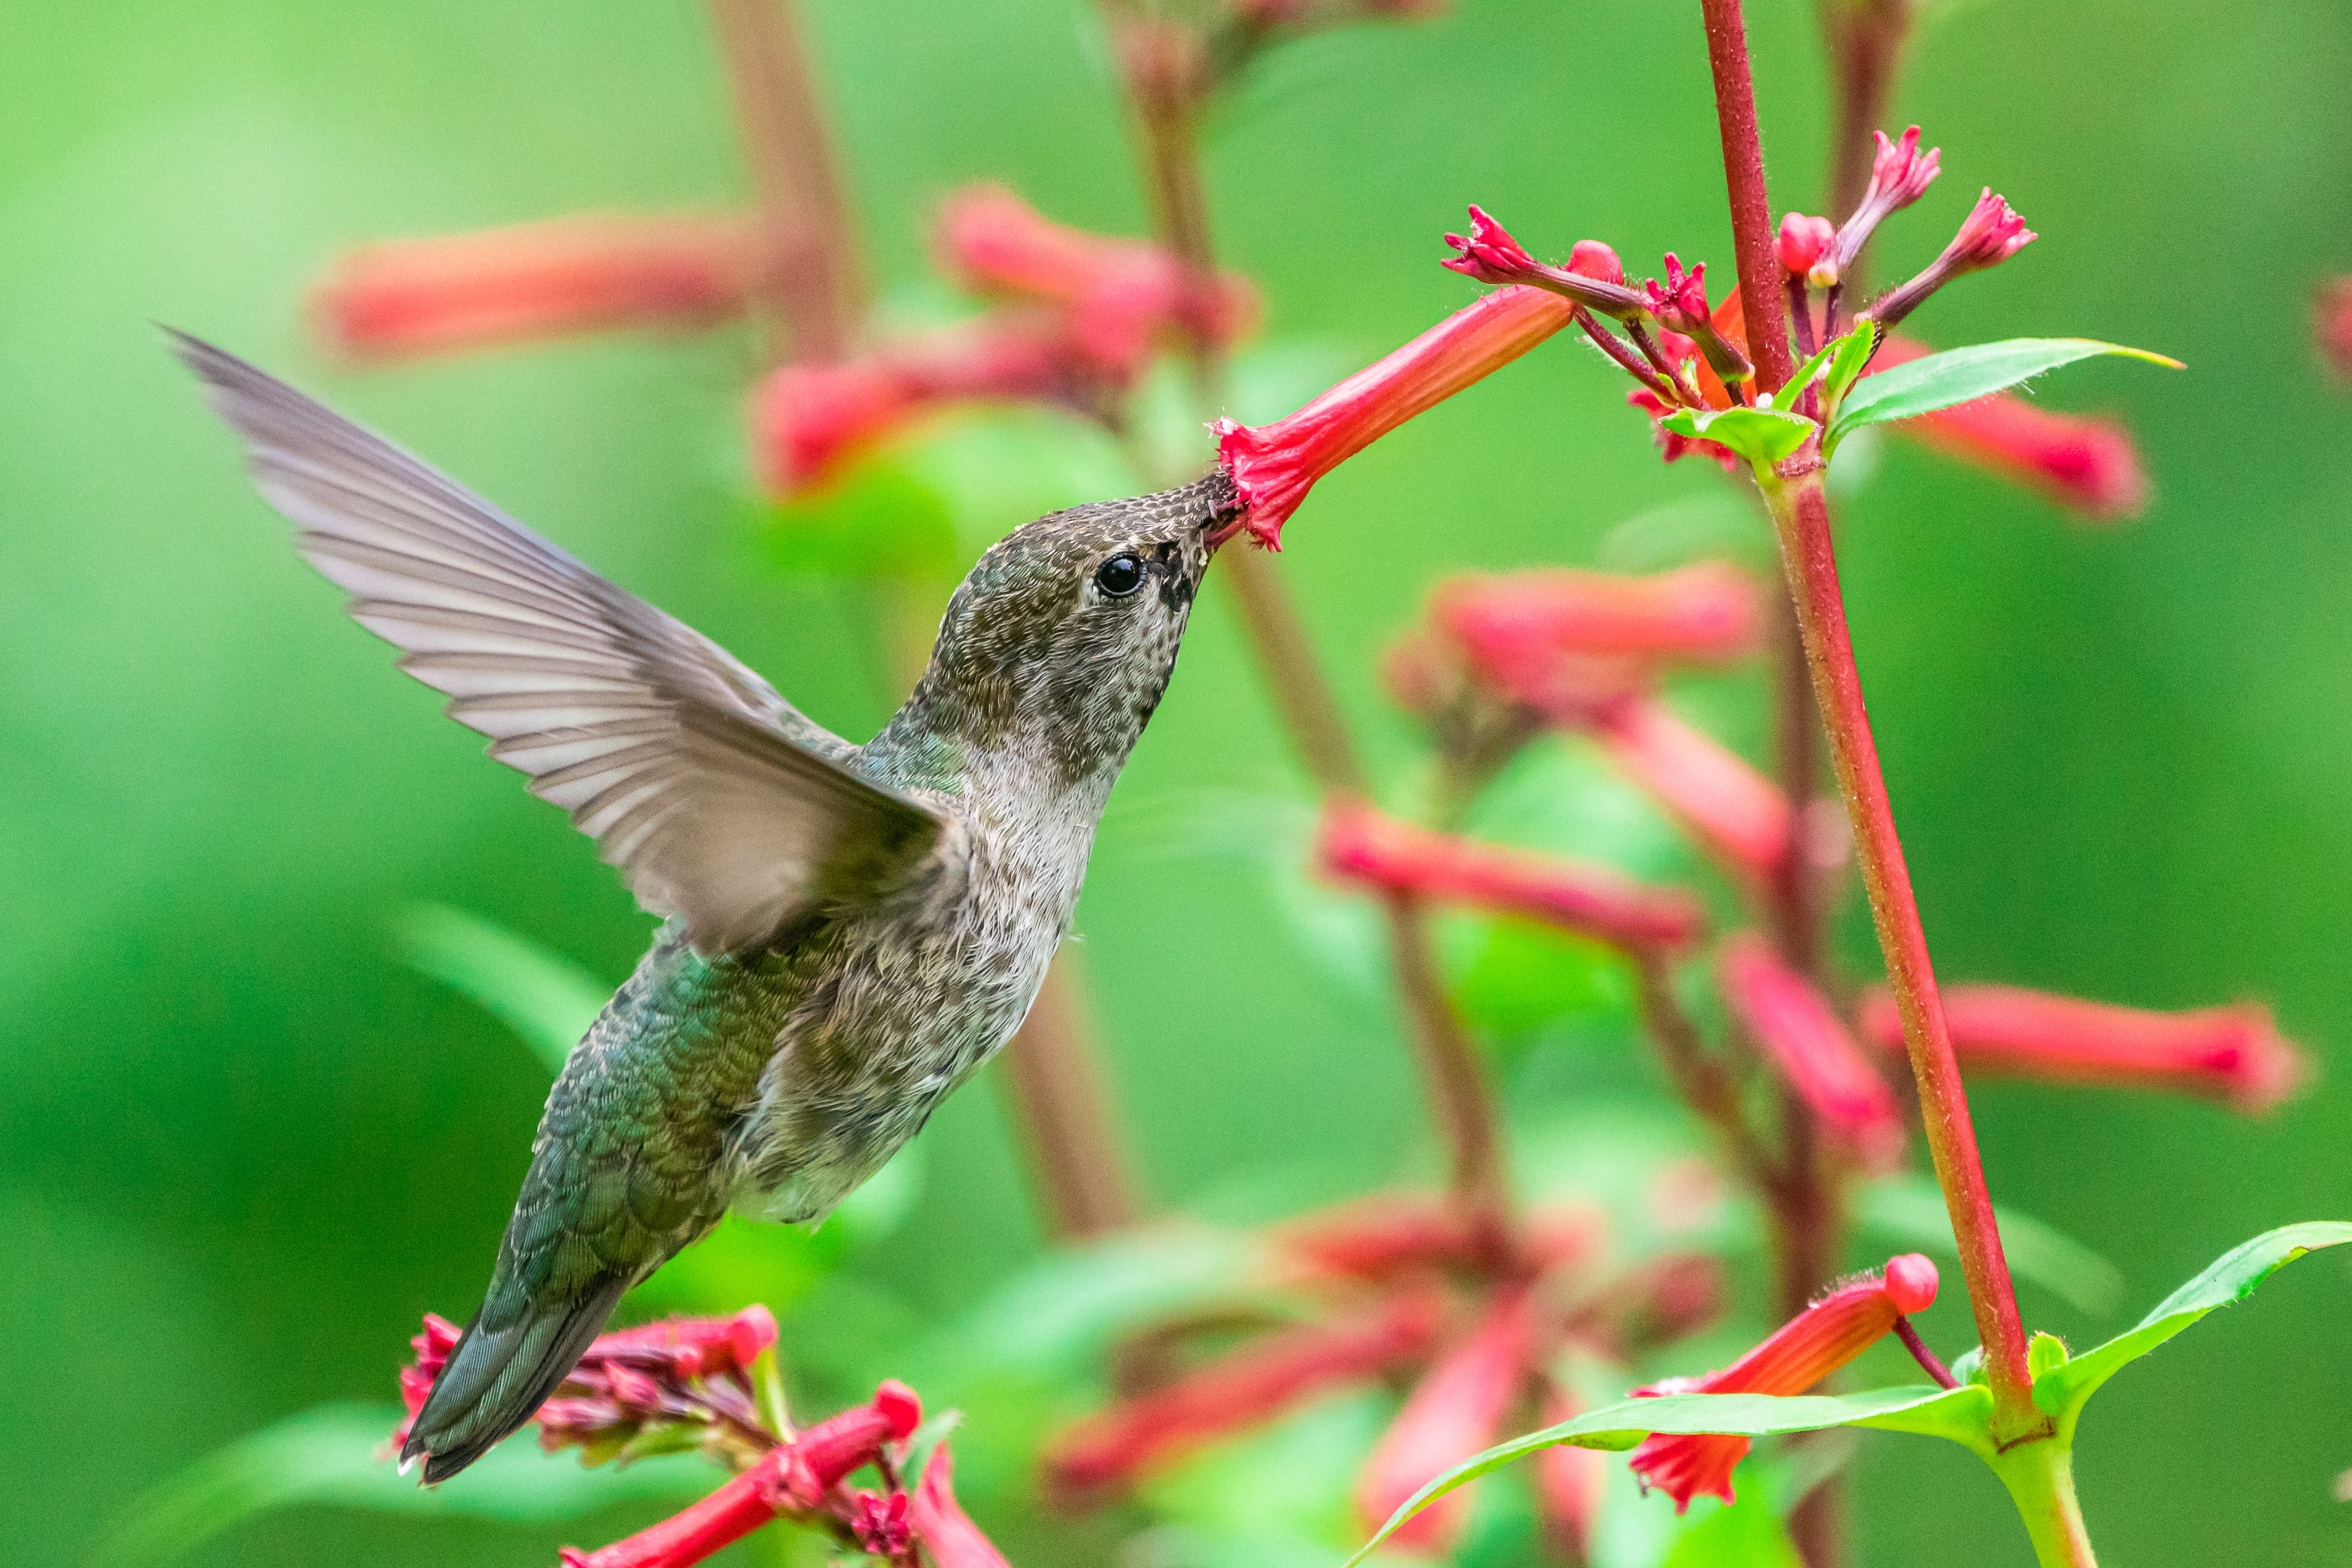 Hummingbird feeding on flower nectar